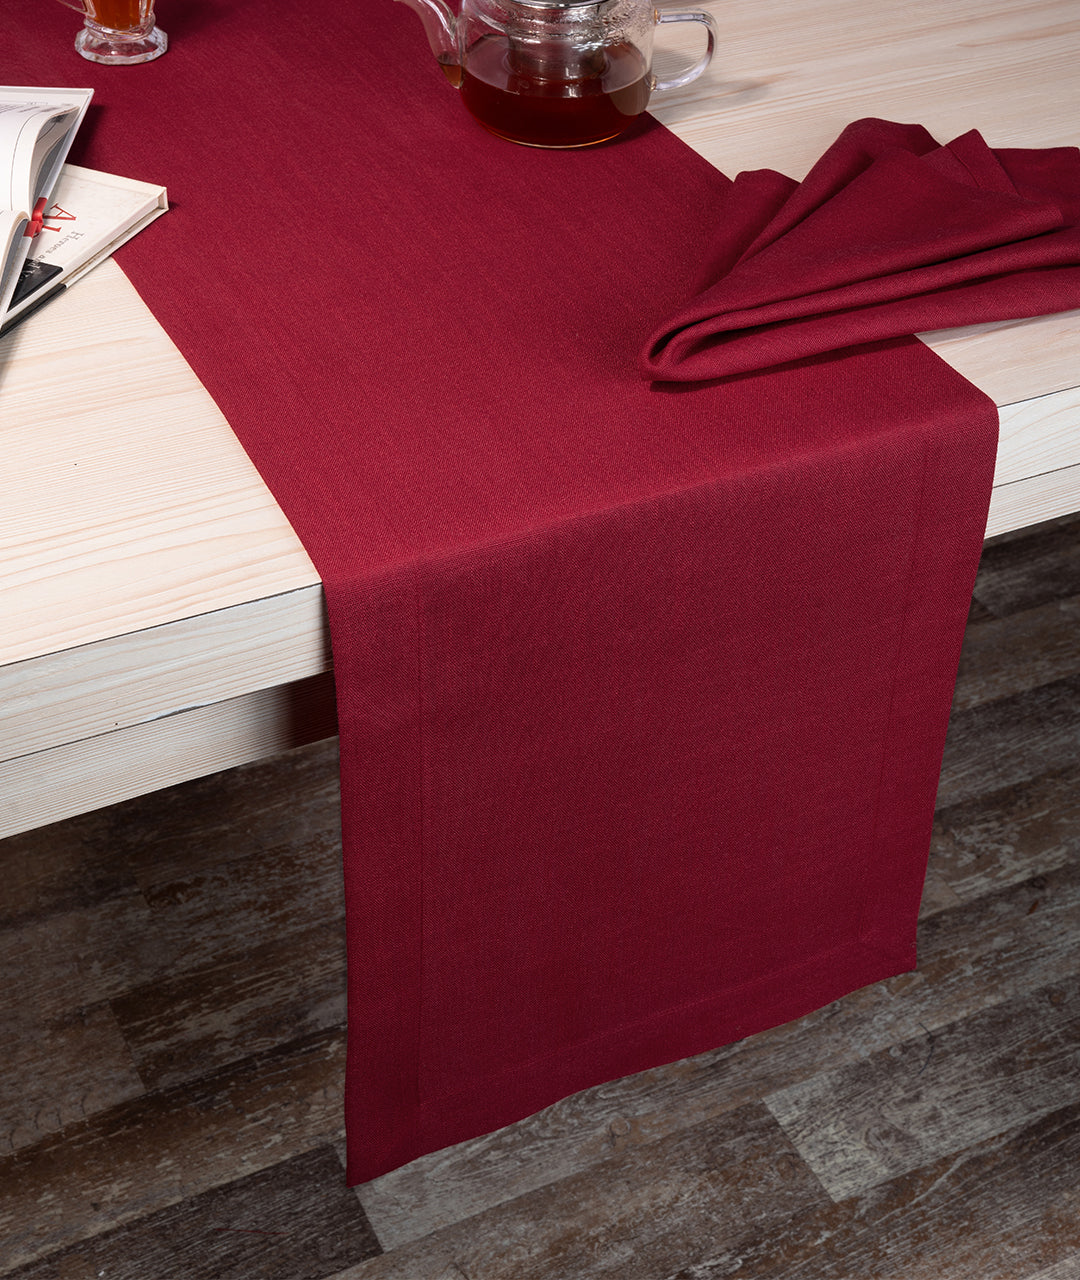 Red Linen Textured Table Runner - Mitered Corner